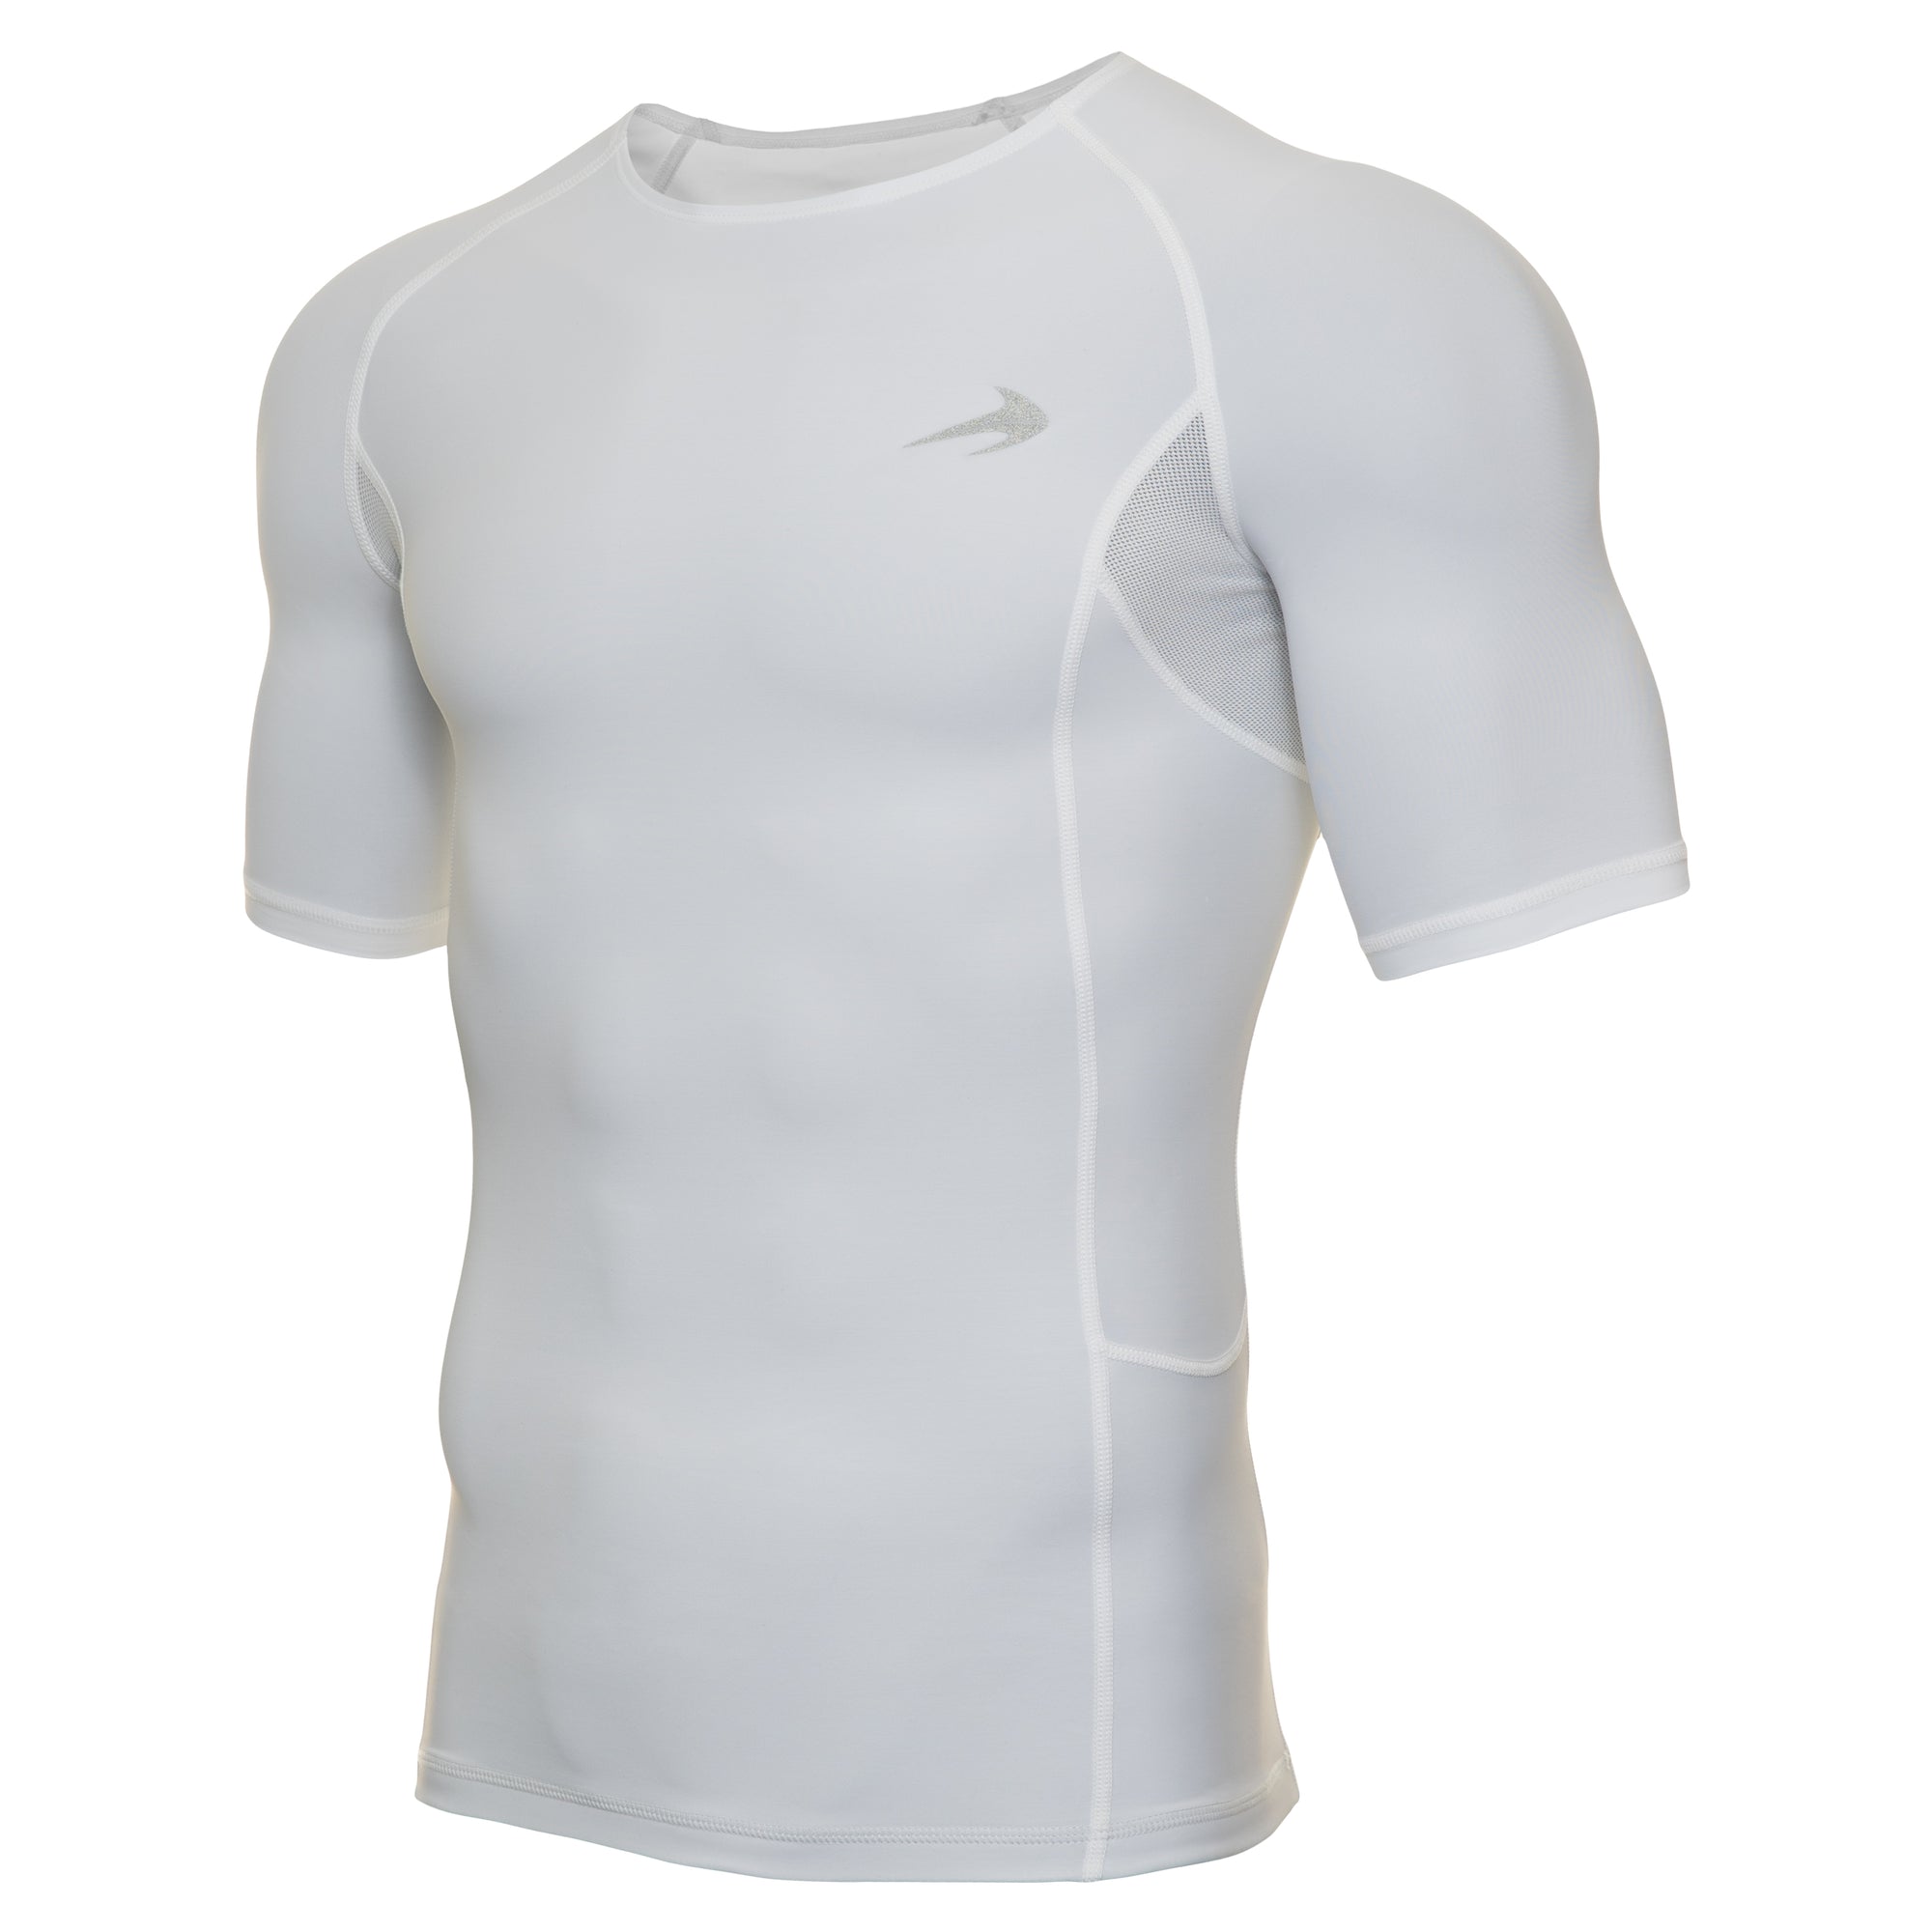 Men's Compression Short Sleeve Shirt - White